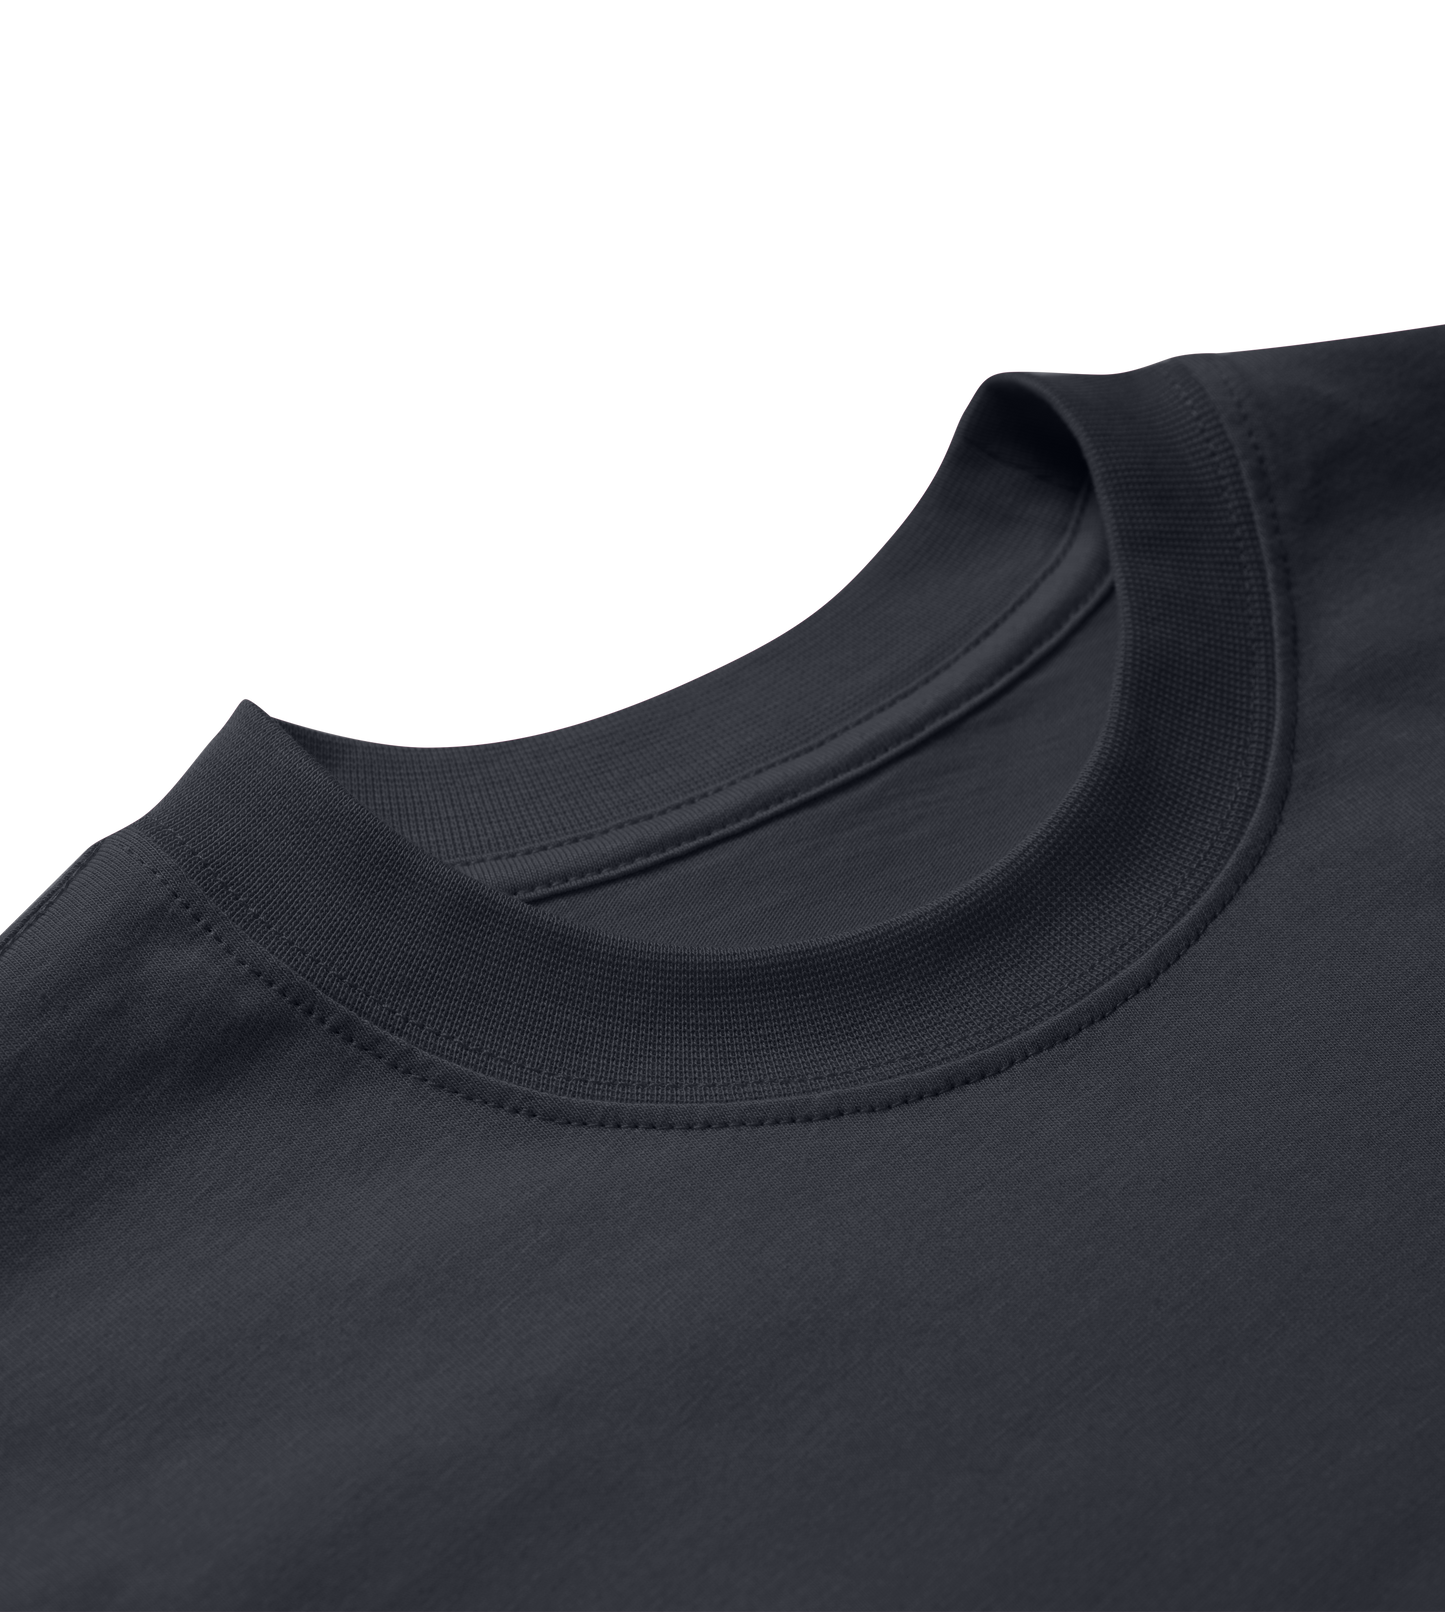 PALM TREE ENDLESS SUMMER CLUB OFF-BLACK - Oversize Unisex Organic Cotton T-Shirt